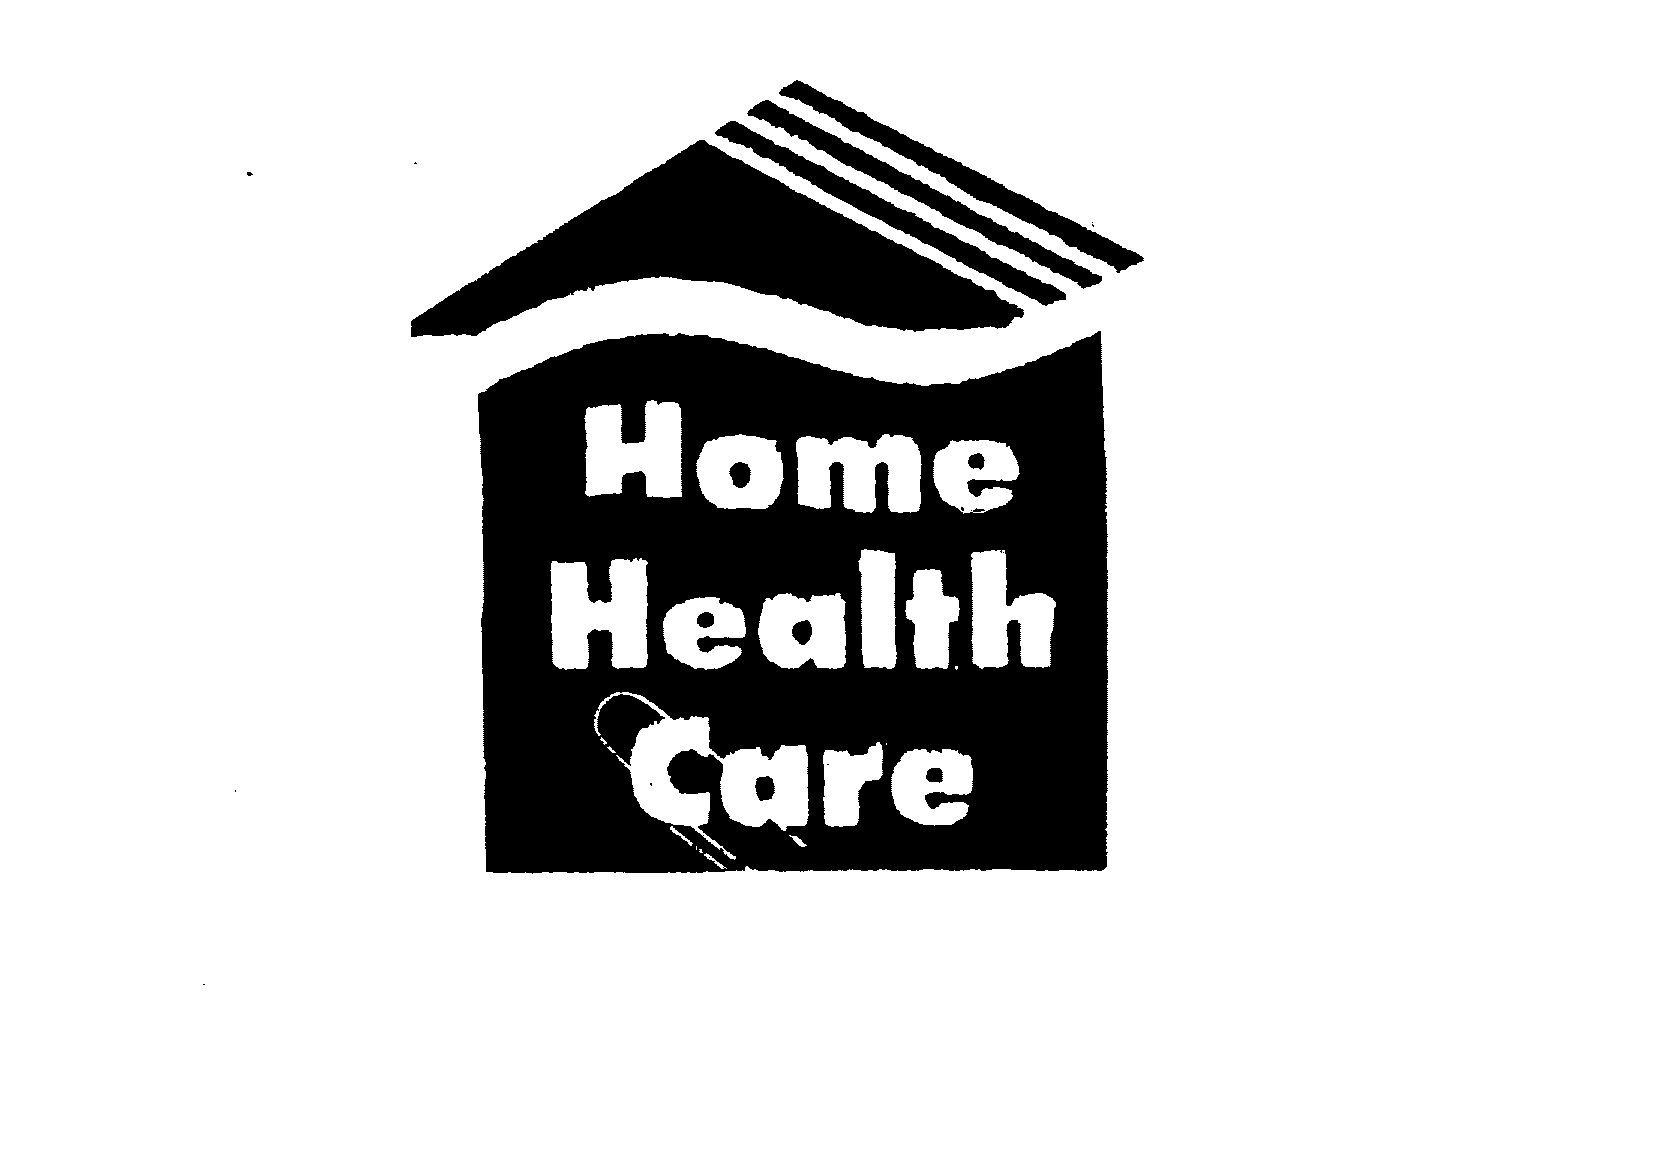  HOME HEALTH CARE